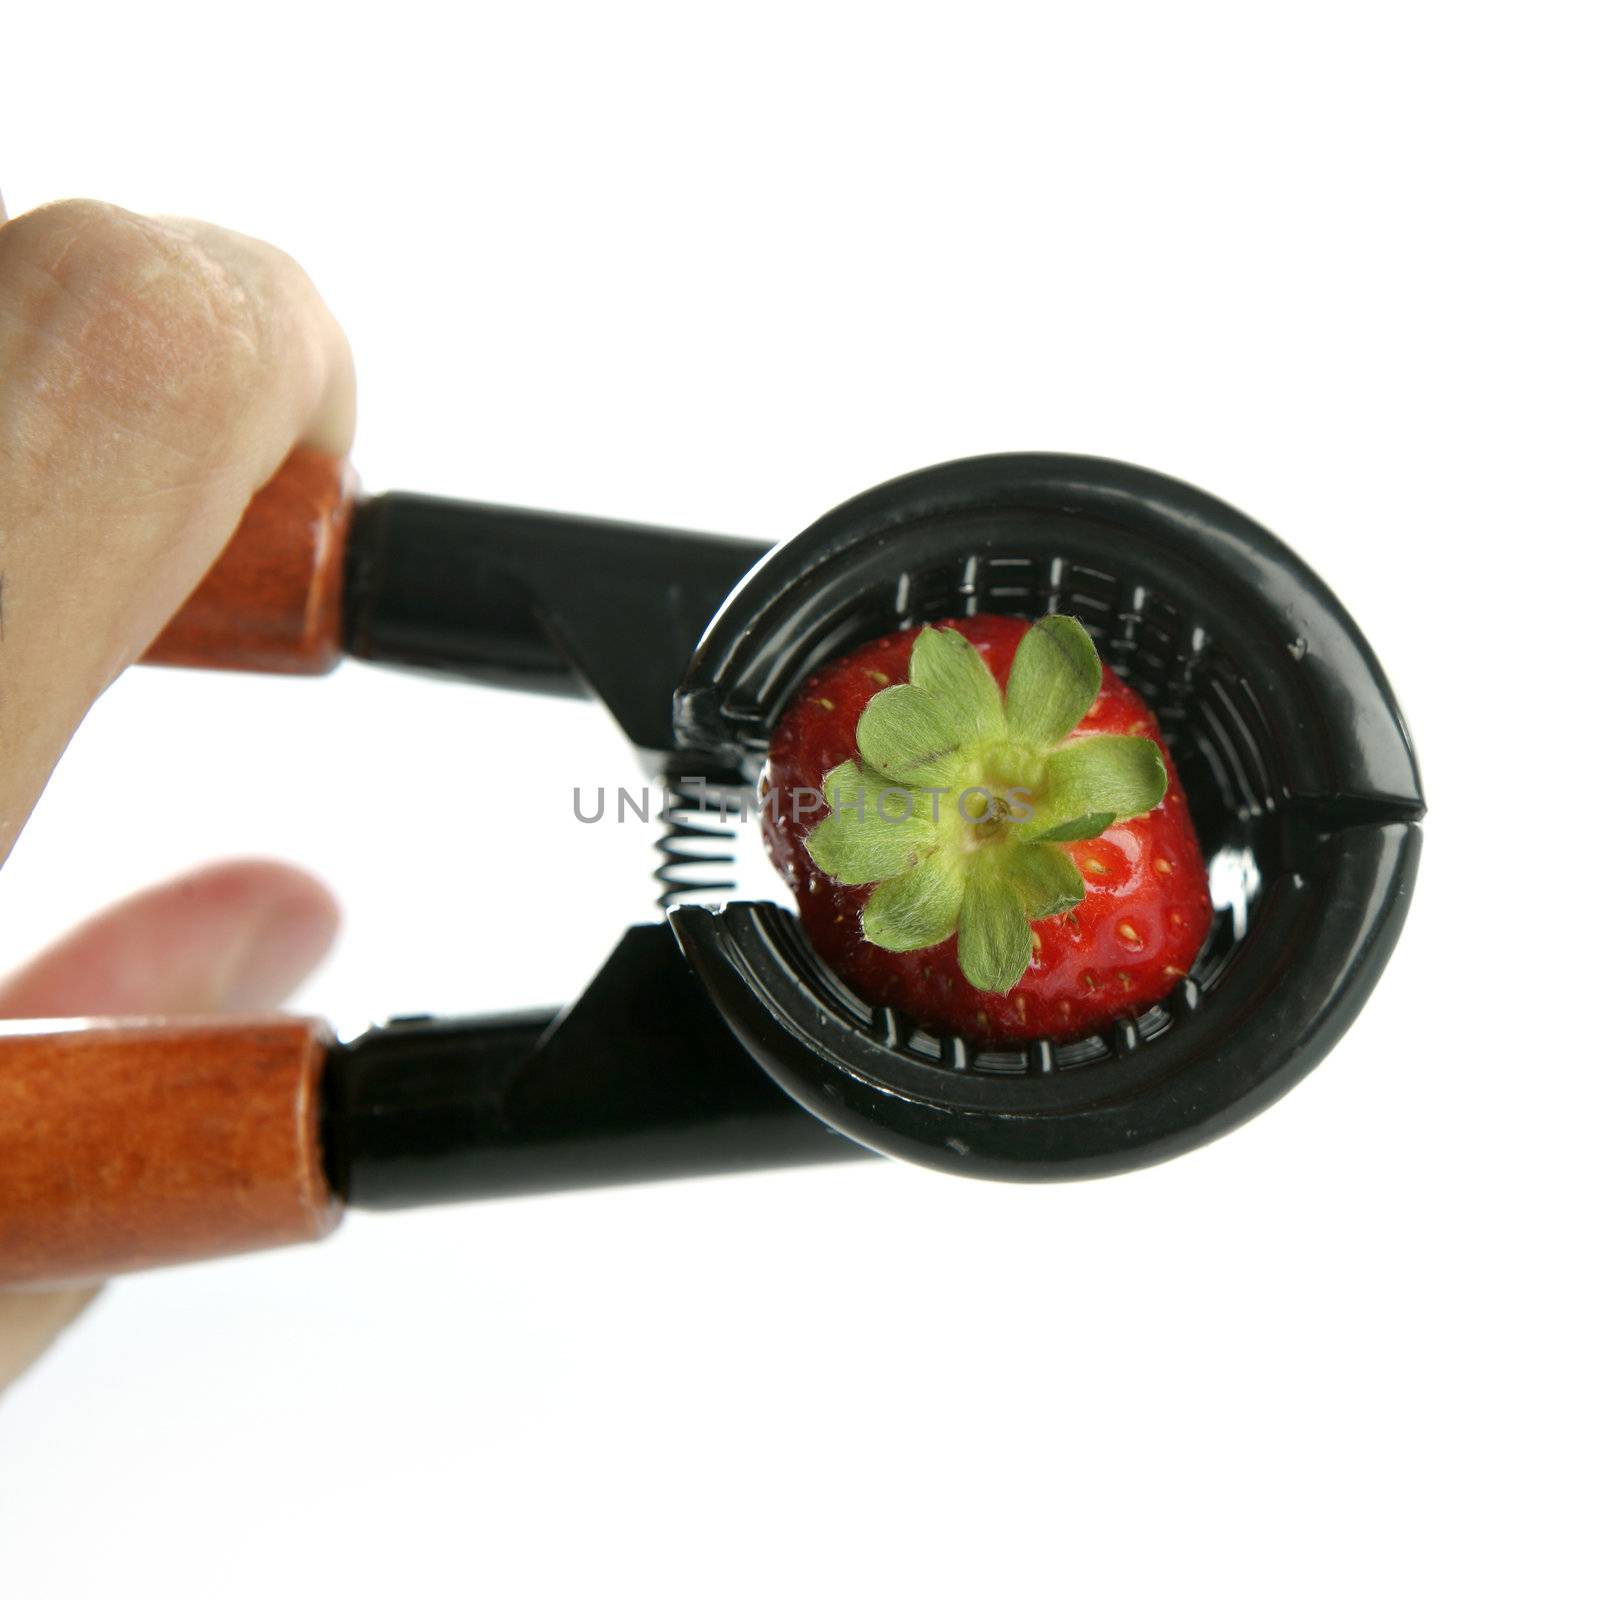 Hand pressuring a strawberry with nutcracker by lunamarina